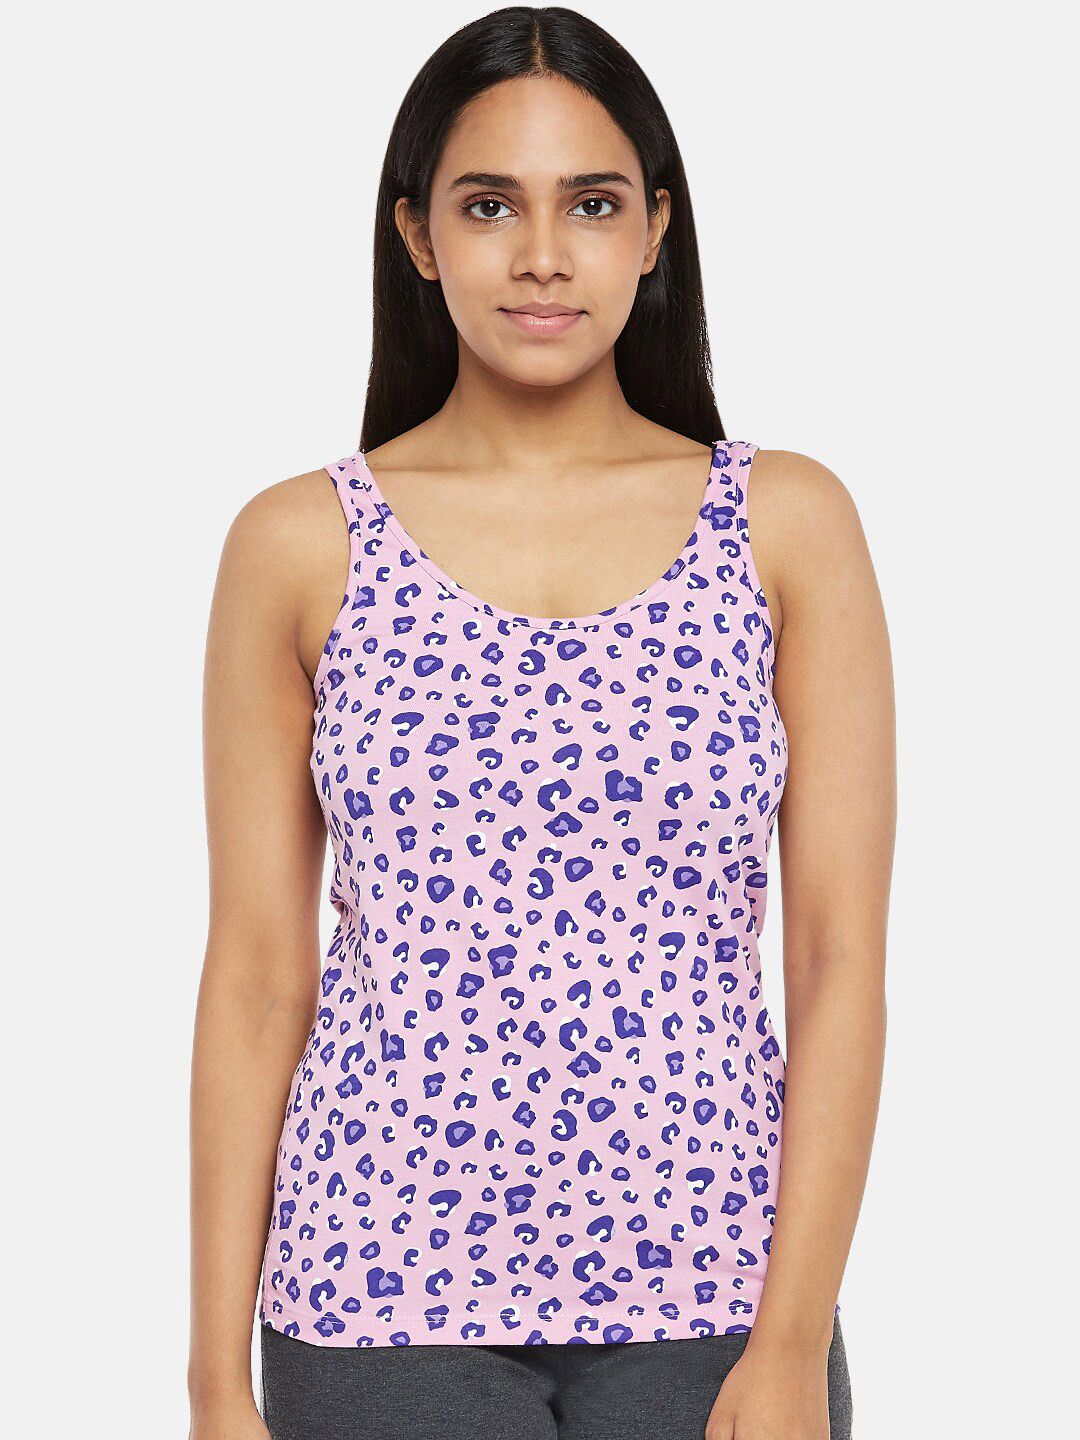 Dreamz by Pantaloons Pink & Navy Blue Animal Tank Lounge tshirt Price in India